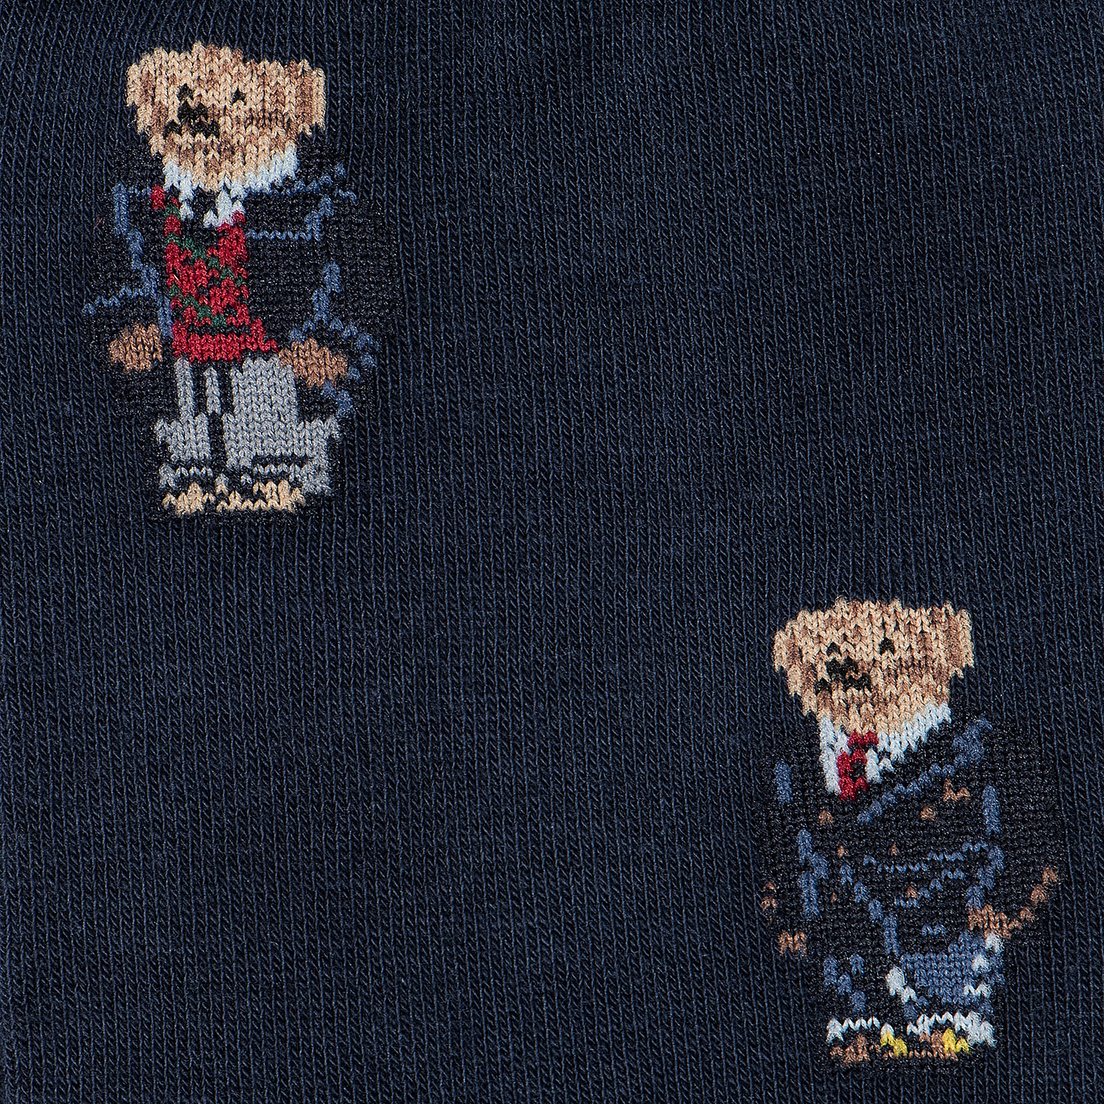 Polo Ralph Lauren Комплект носков Bear And Stripe 2-Pack